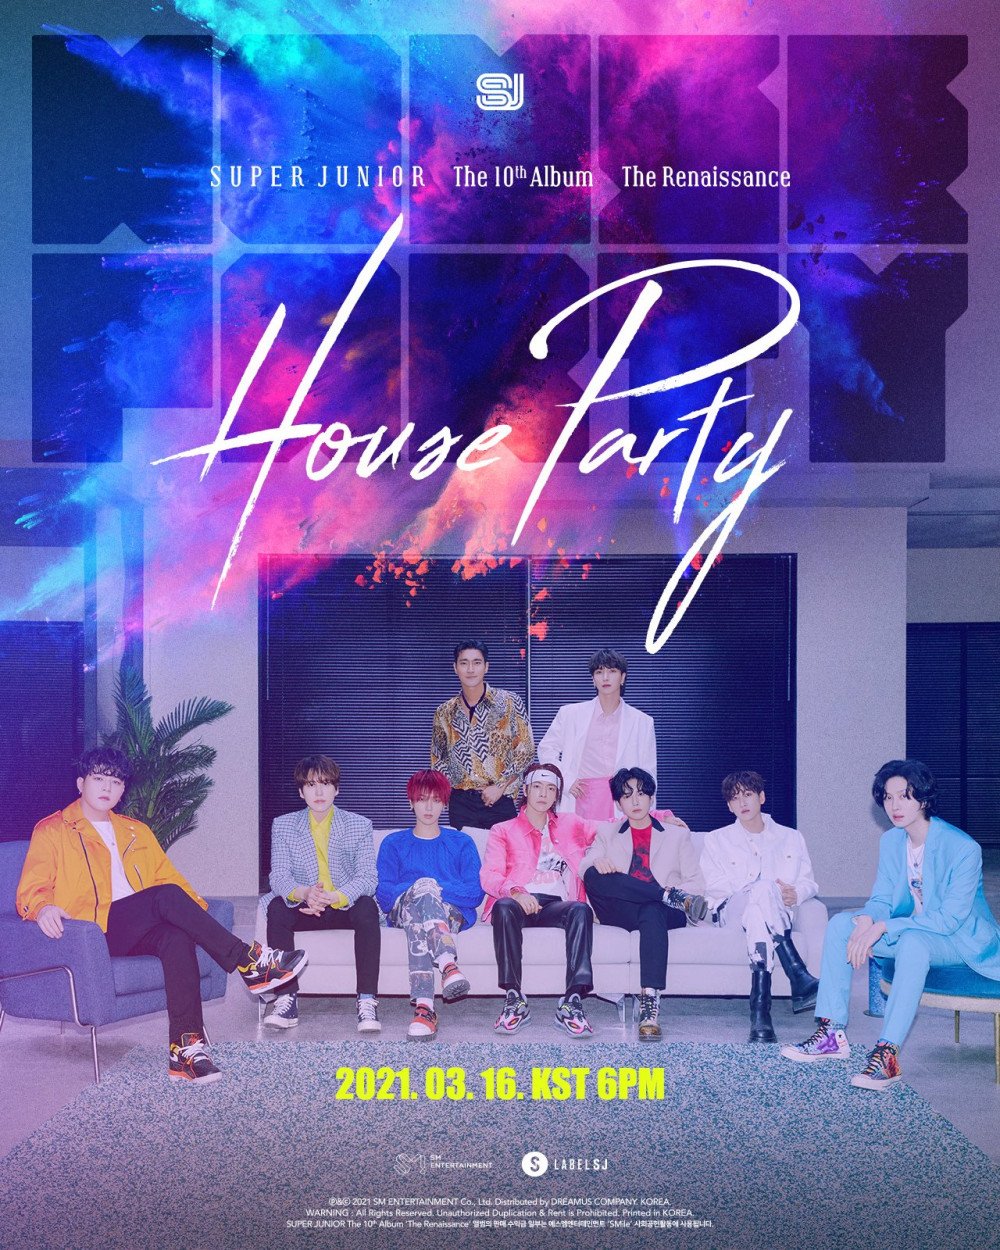 [Камбэк] Super Junior альбом "The Renaissance": музыкальный клип "House Party"